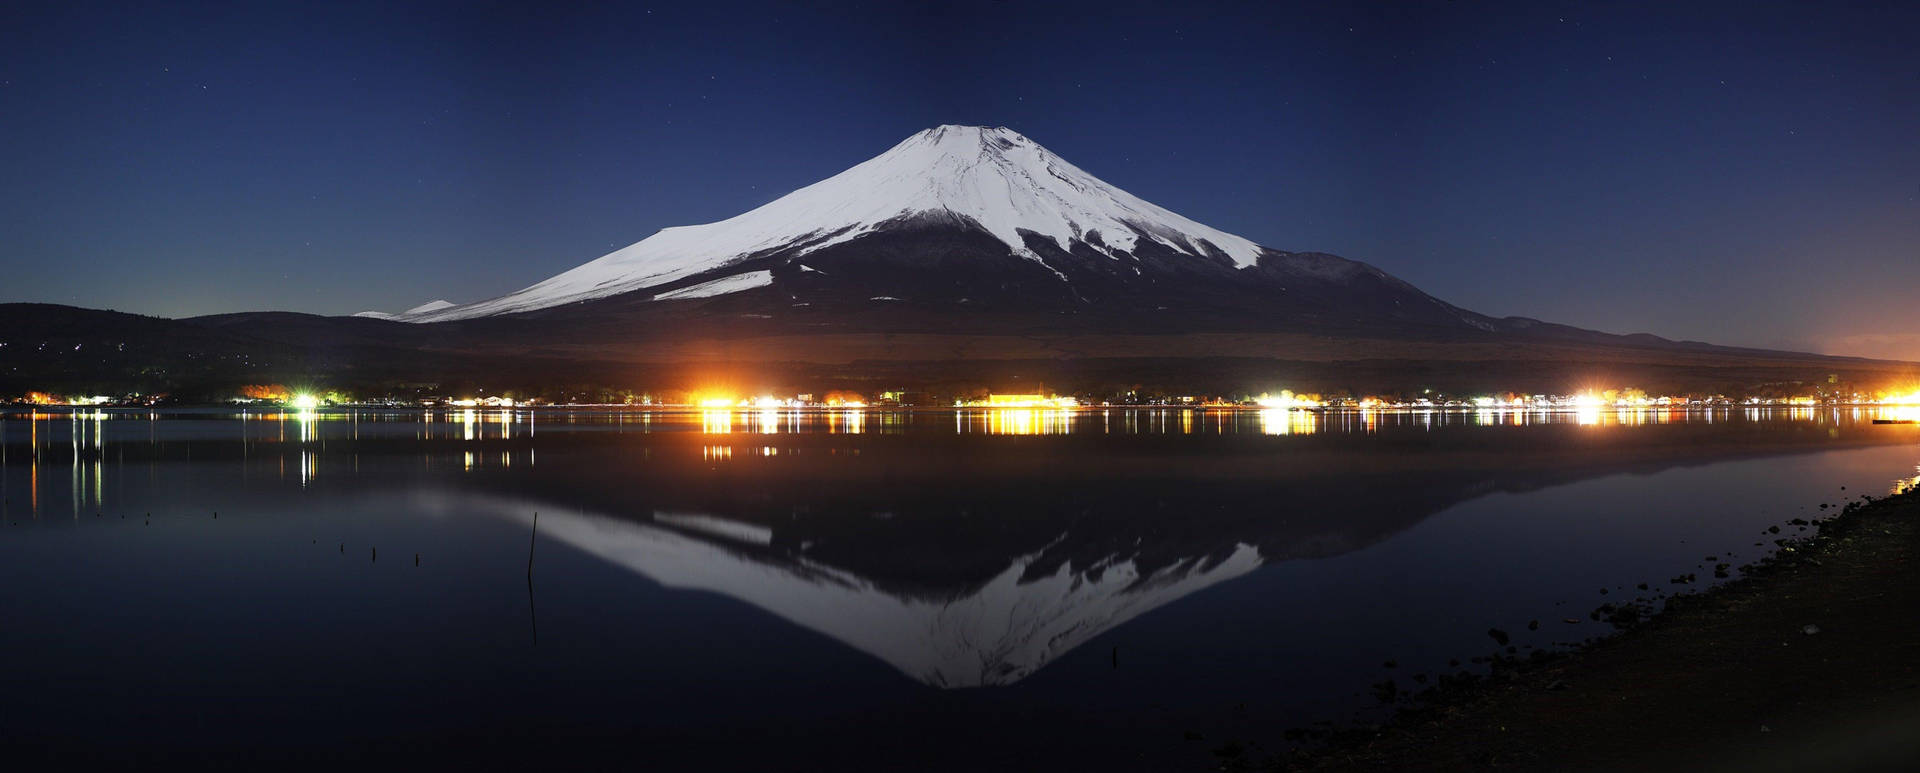 4k Dual Monitor Mount Fuji At Night